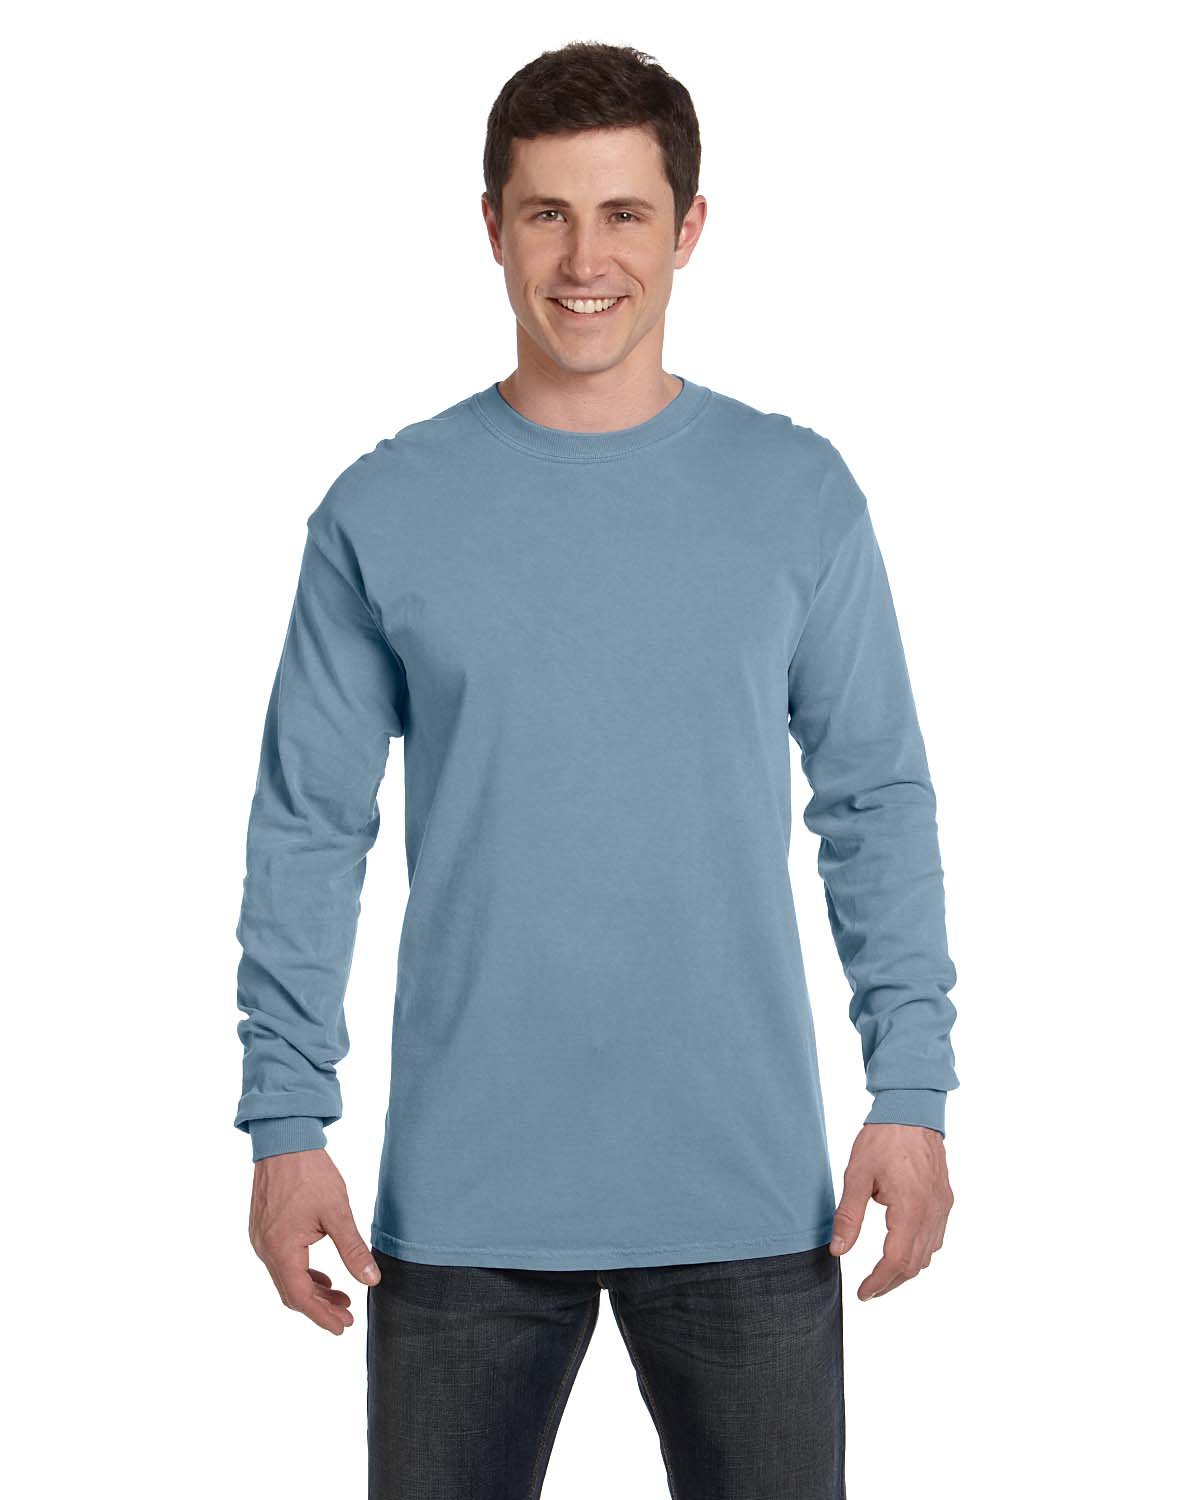 ALPHALETE Monarch Collection Shirt Men's Large Blue Long Sleeve